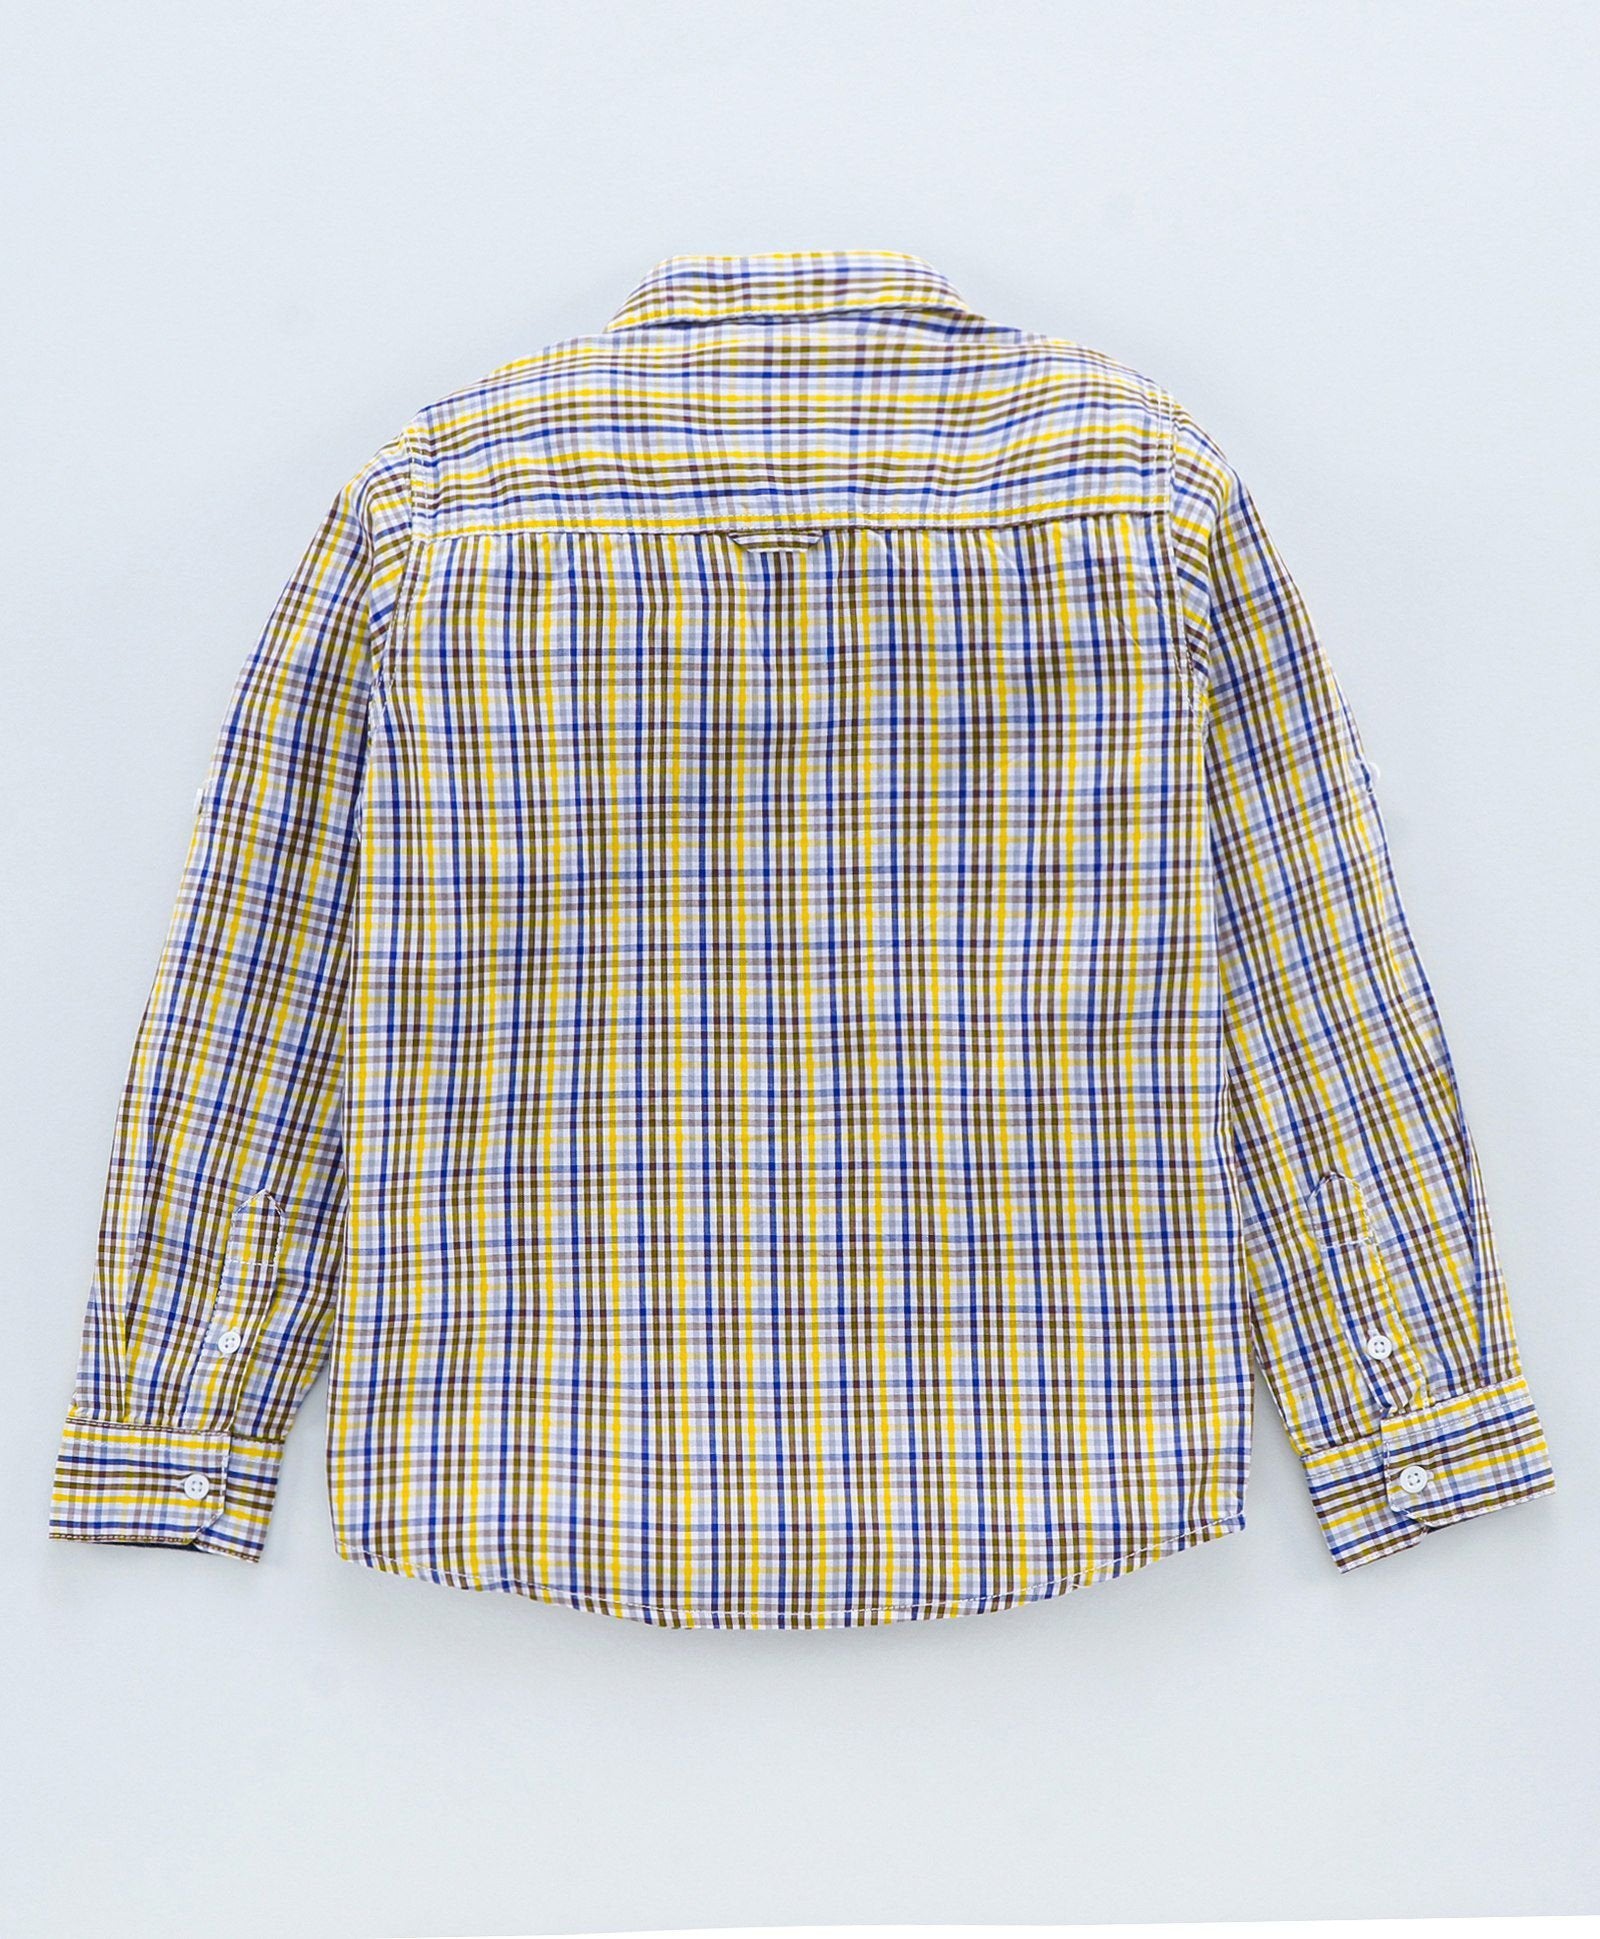 Full Sleeve Checked 100% Cotton Soft Feel Biowash Shirt - Multi Color